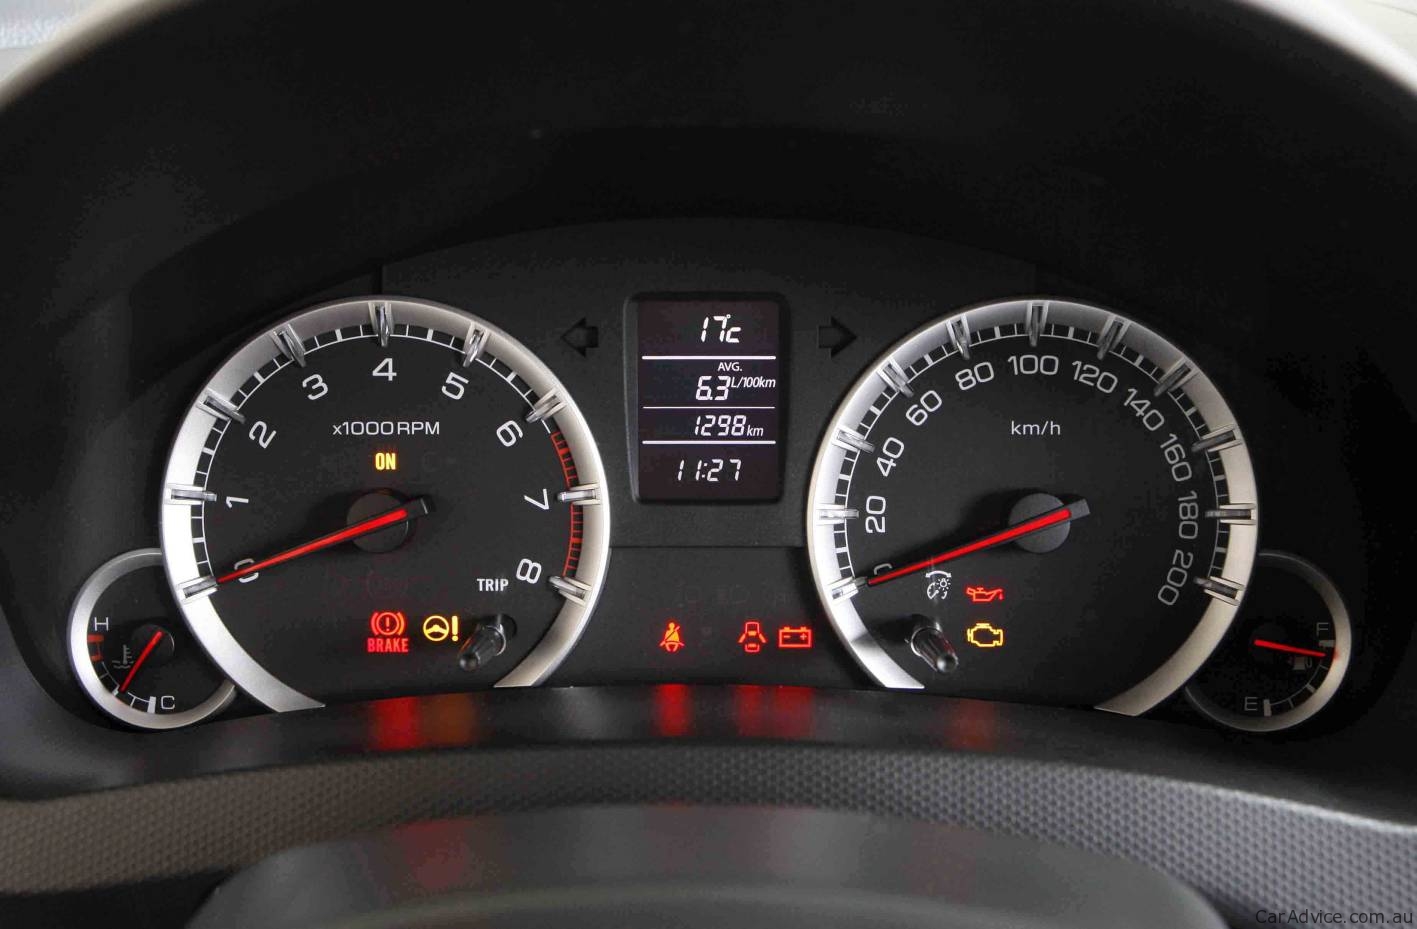 2011 Suzuki Swift interior revealed in new images - photos | CarAdvice